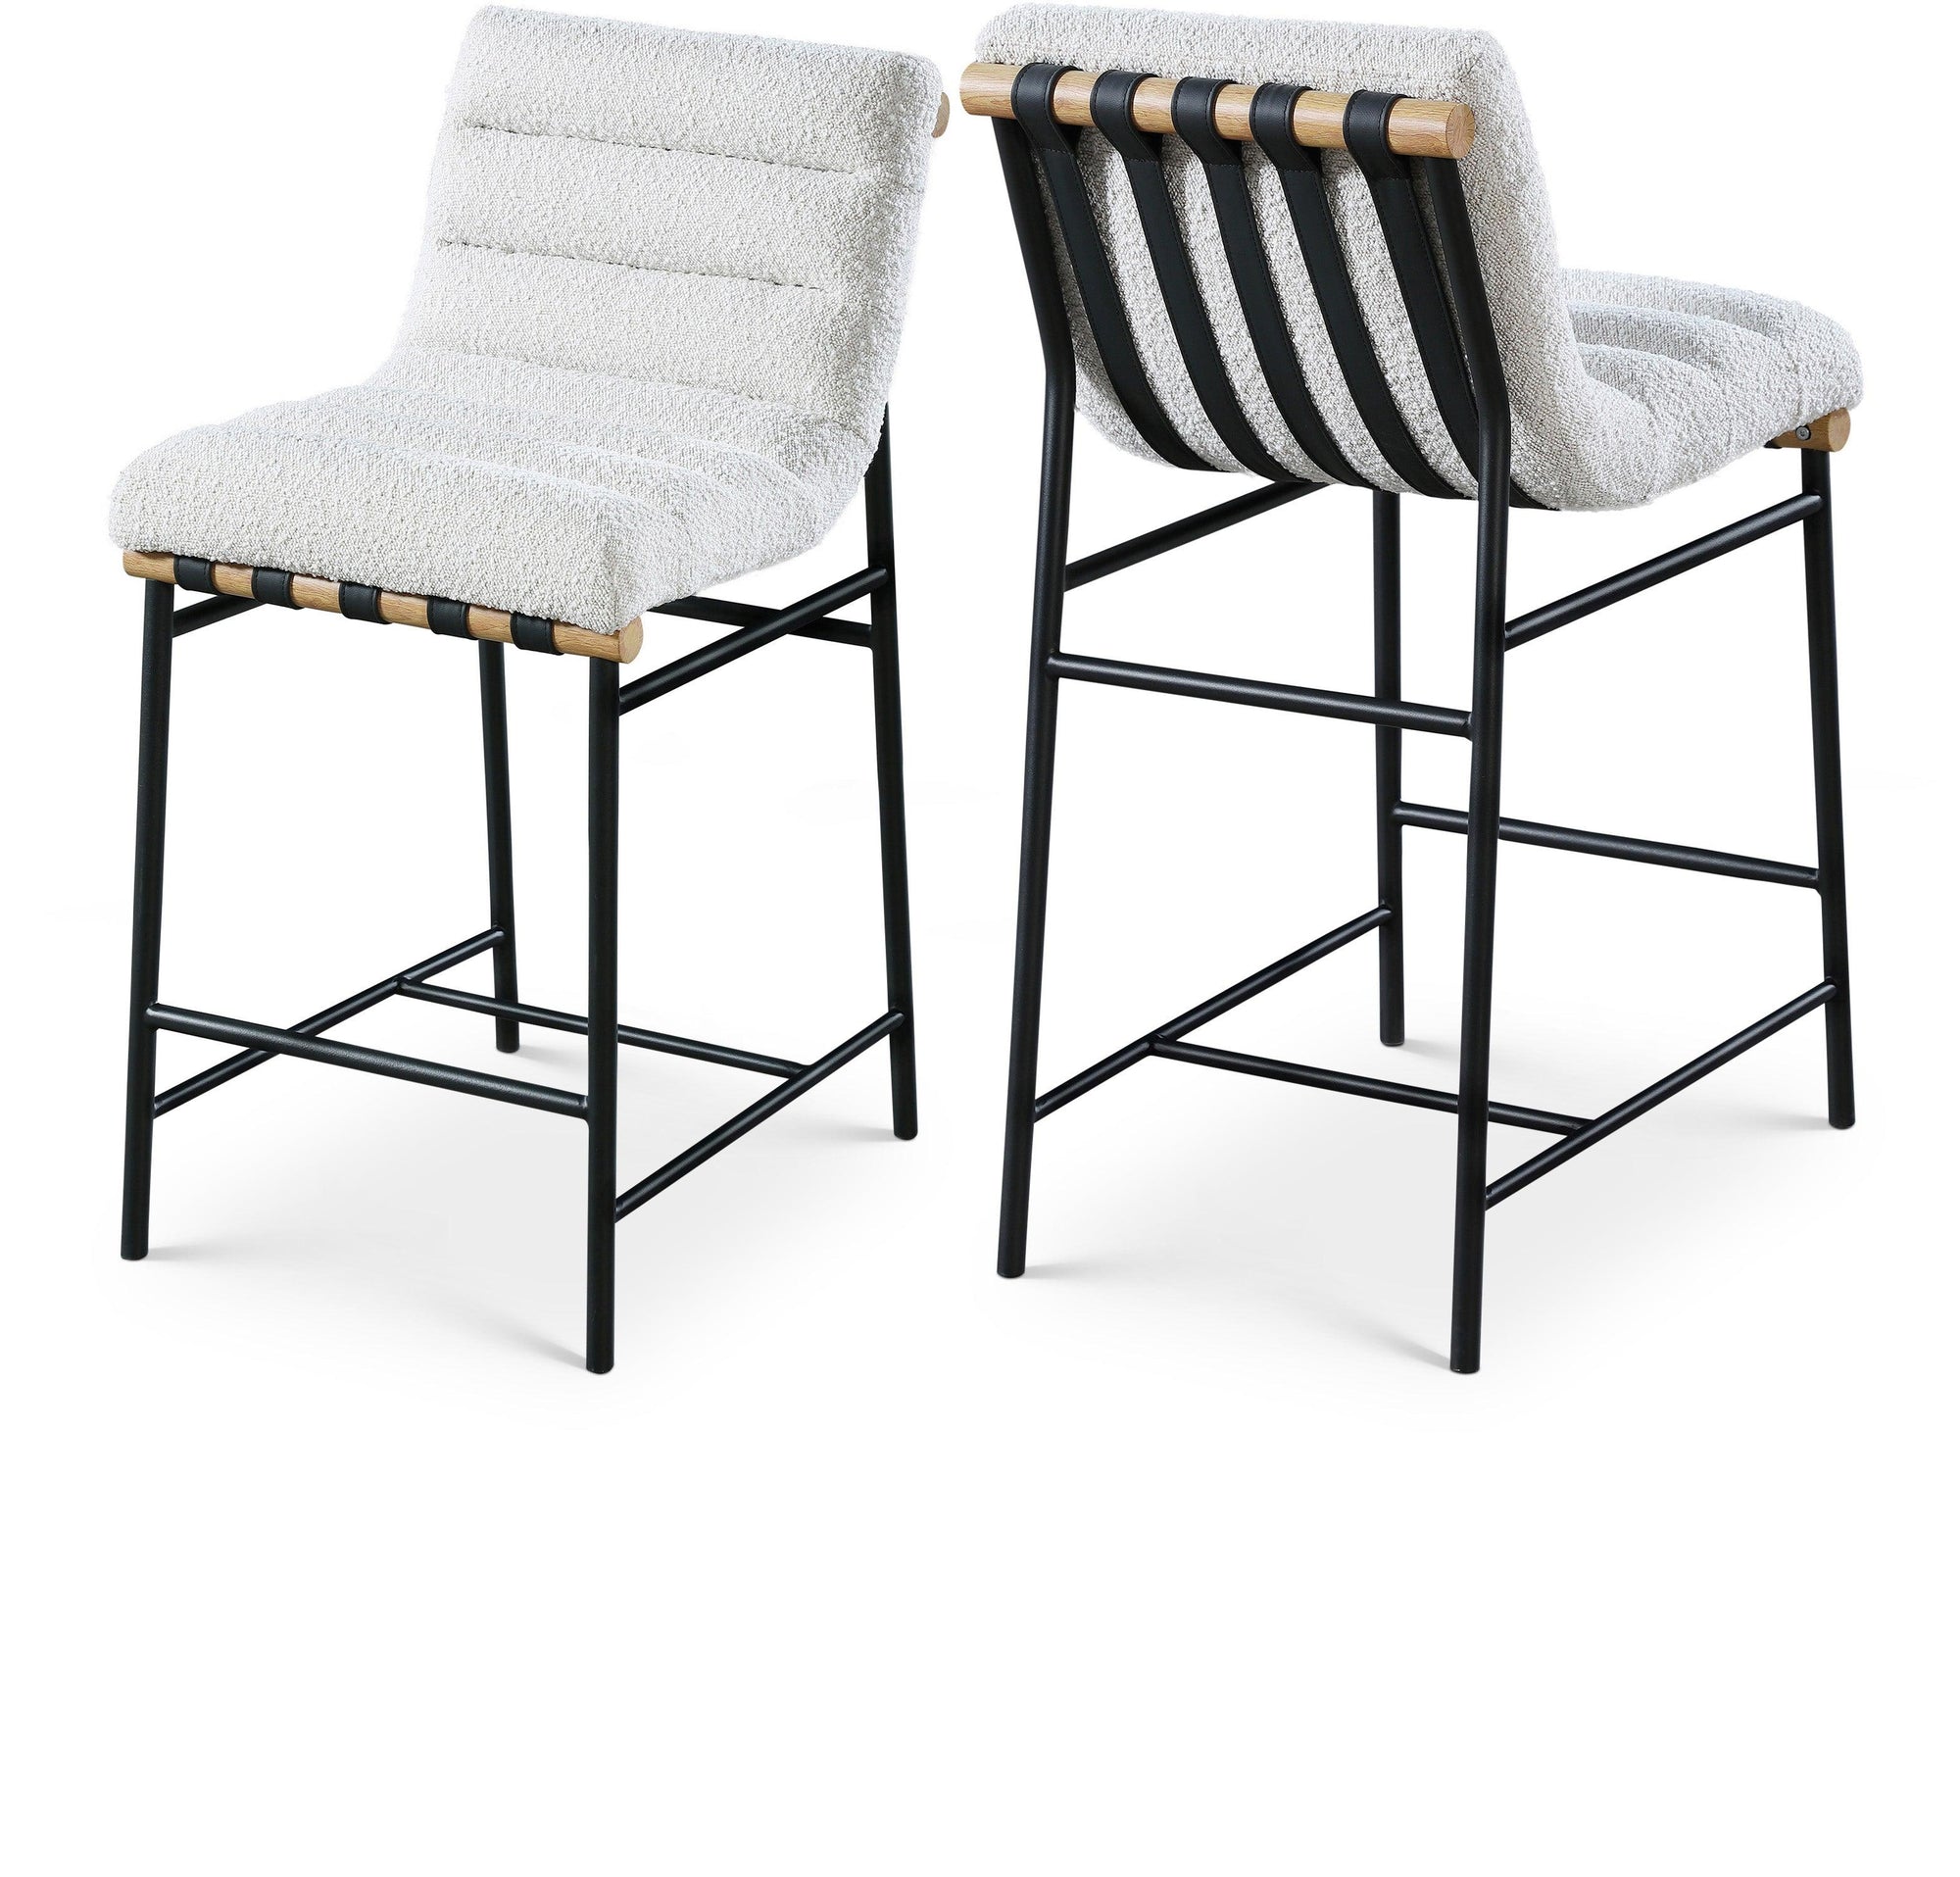 Blake counter stool in Cream - Euro Living Furniture